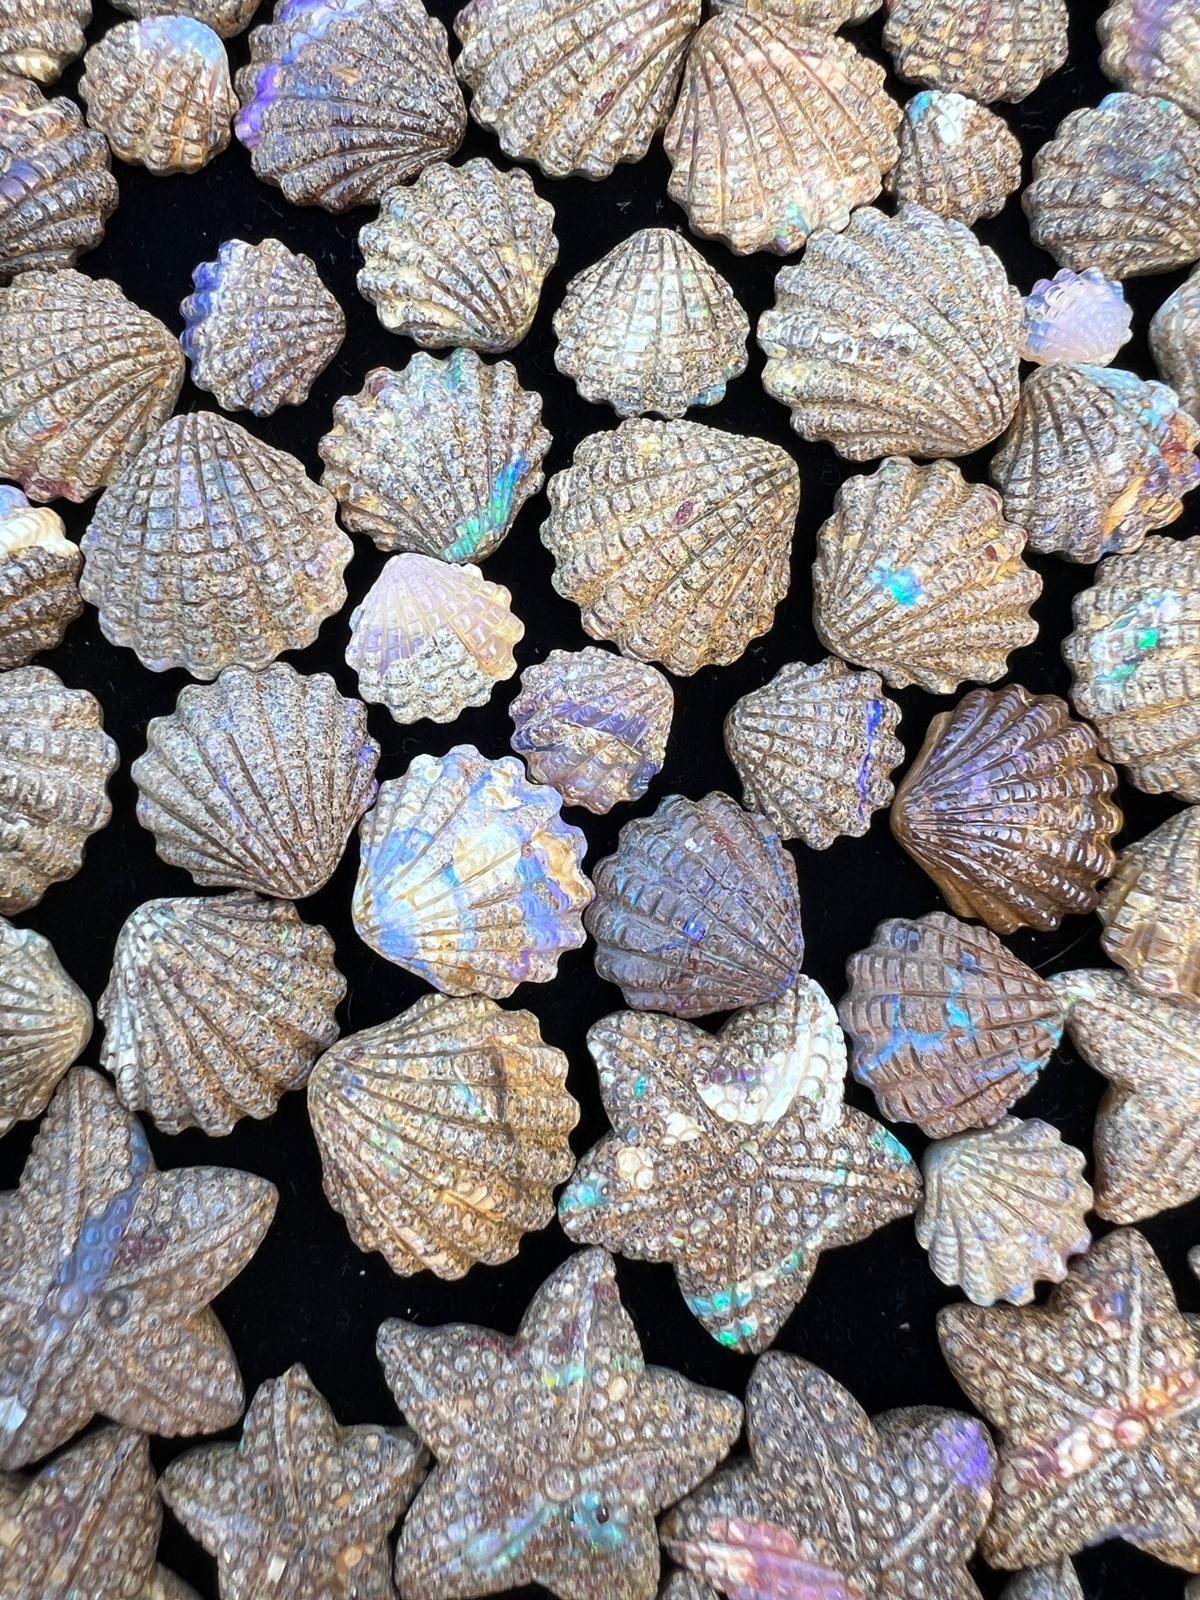 Exquisite 9.08 Ct Australian Boulder Opal Matrix Scallop Shell Carving